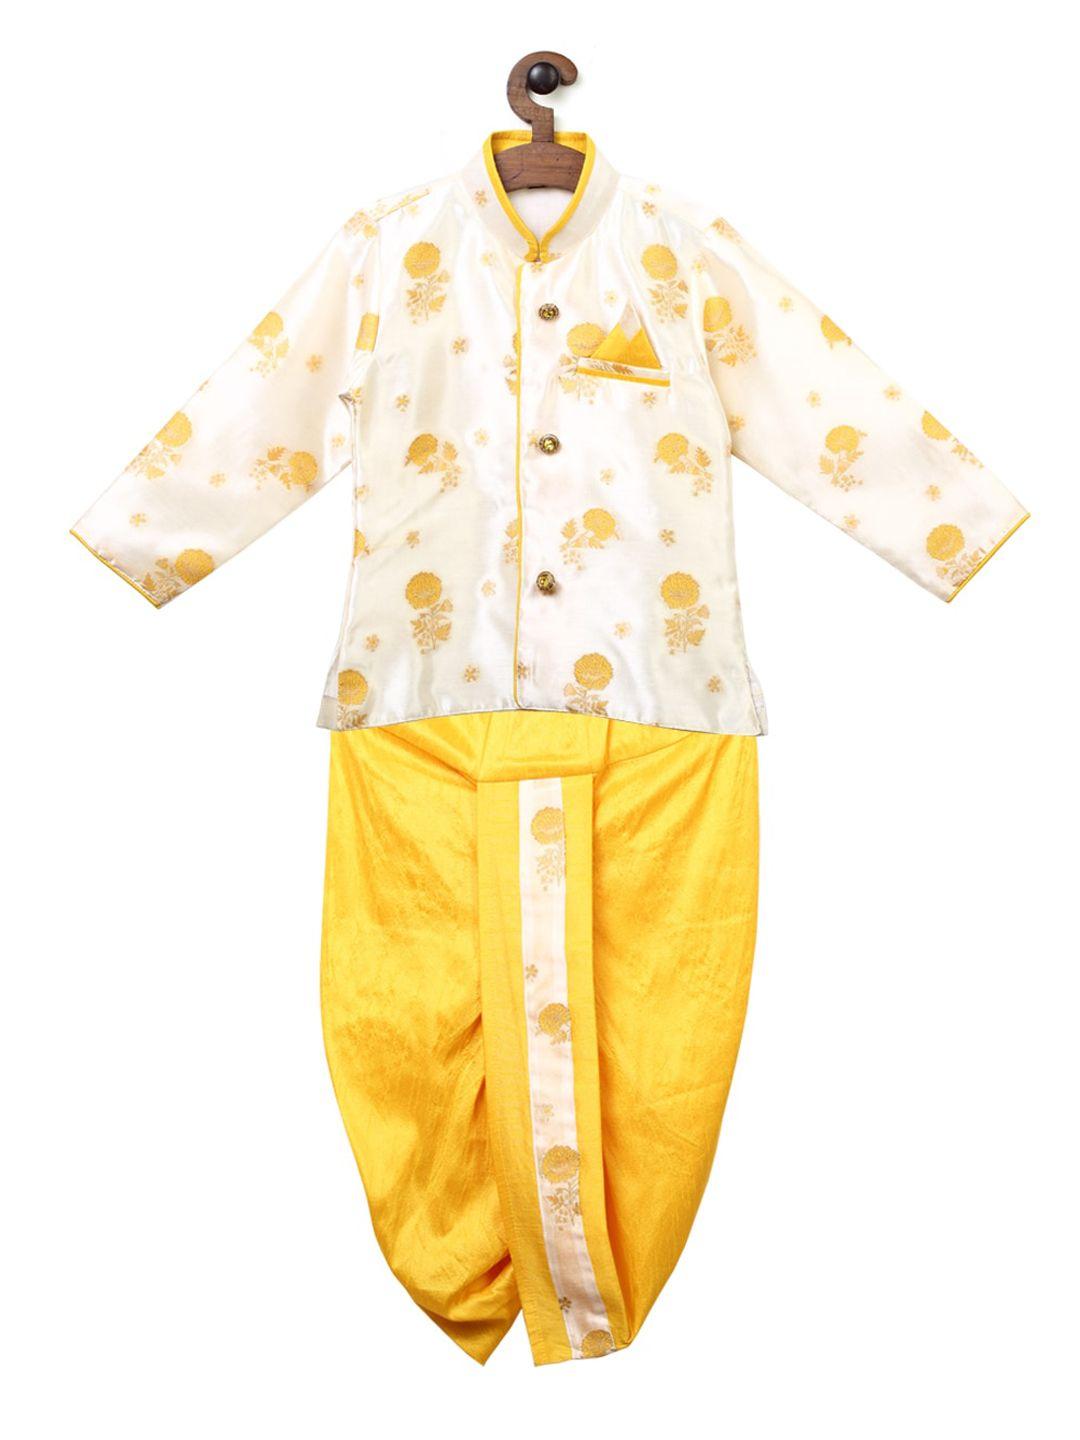 ridokidz boys white & yellow woven design kurti with dhoti pants